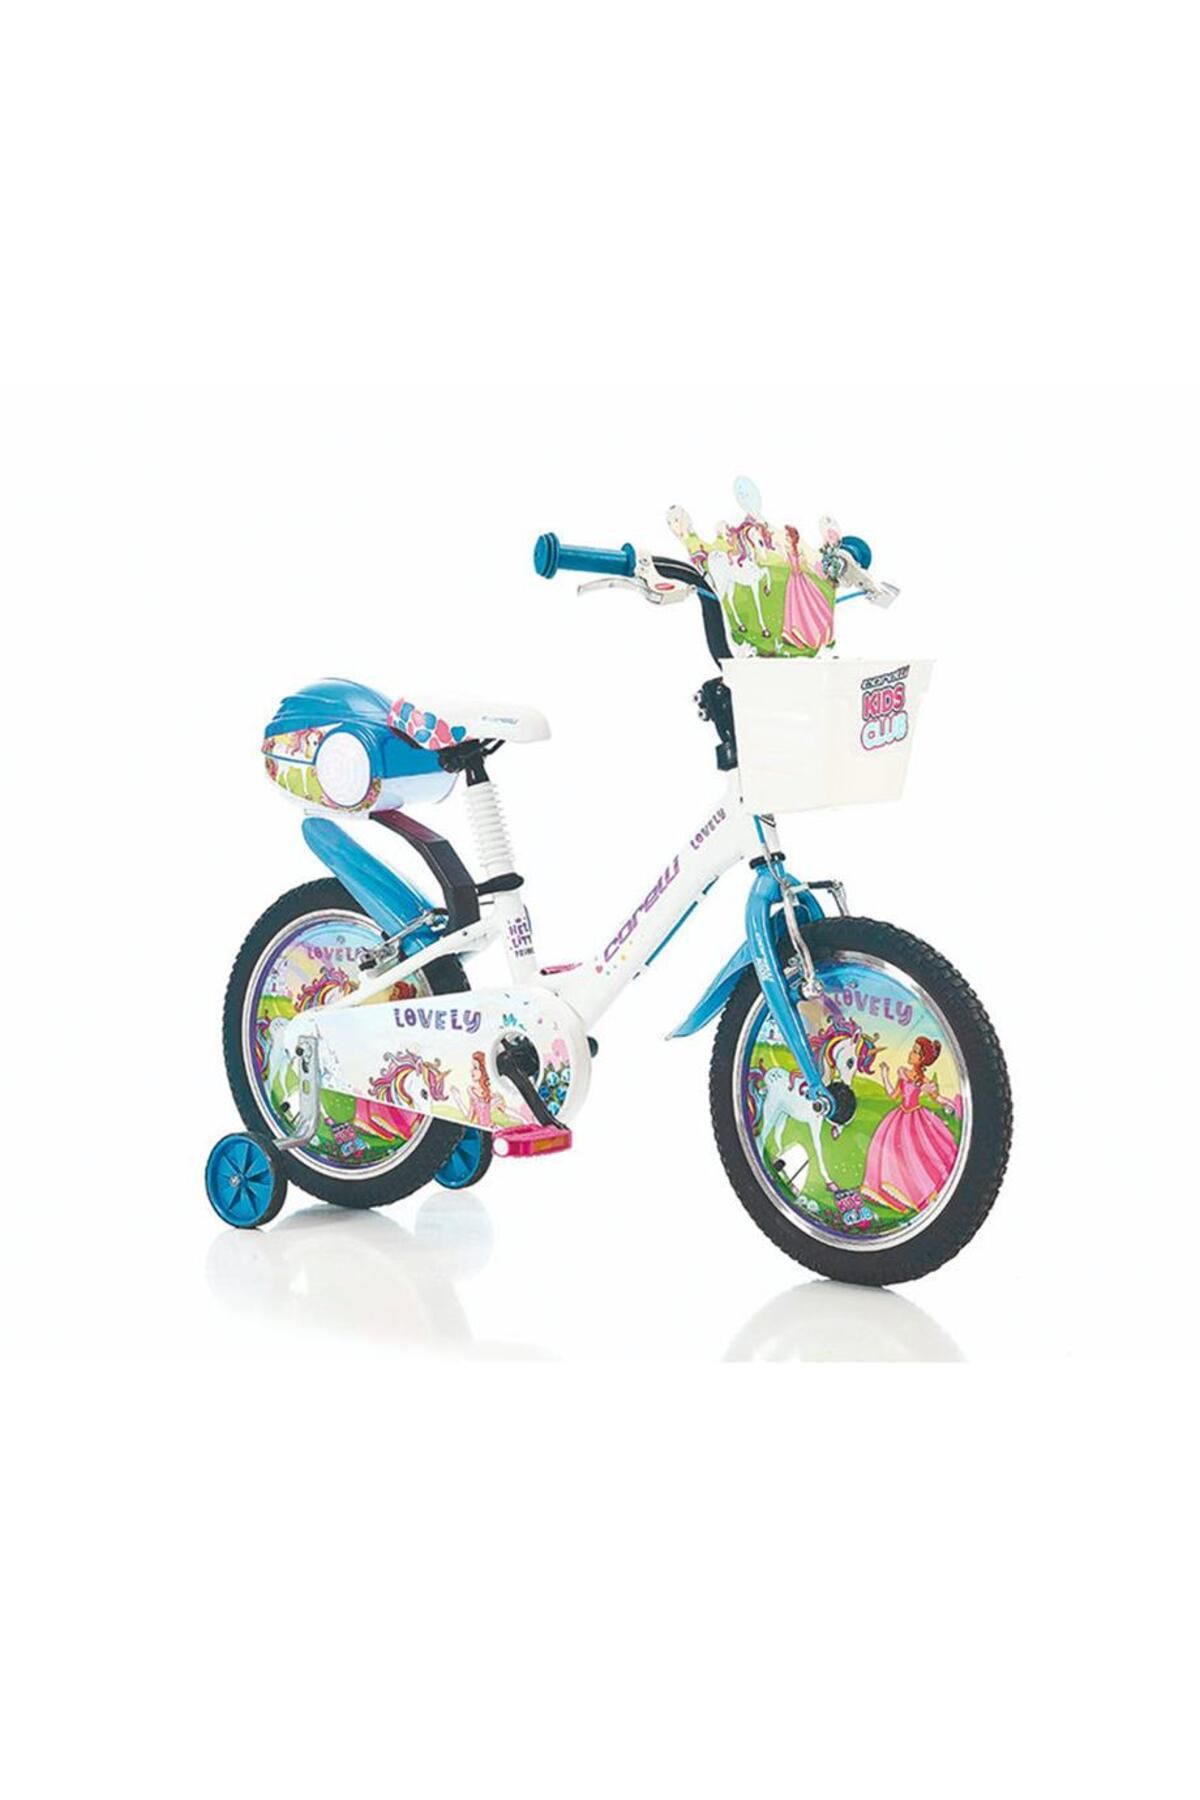 Corelli Lovely 16 Jant Çocuk Bisikleti Alüminyum Kadro Beyaz Mavi